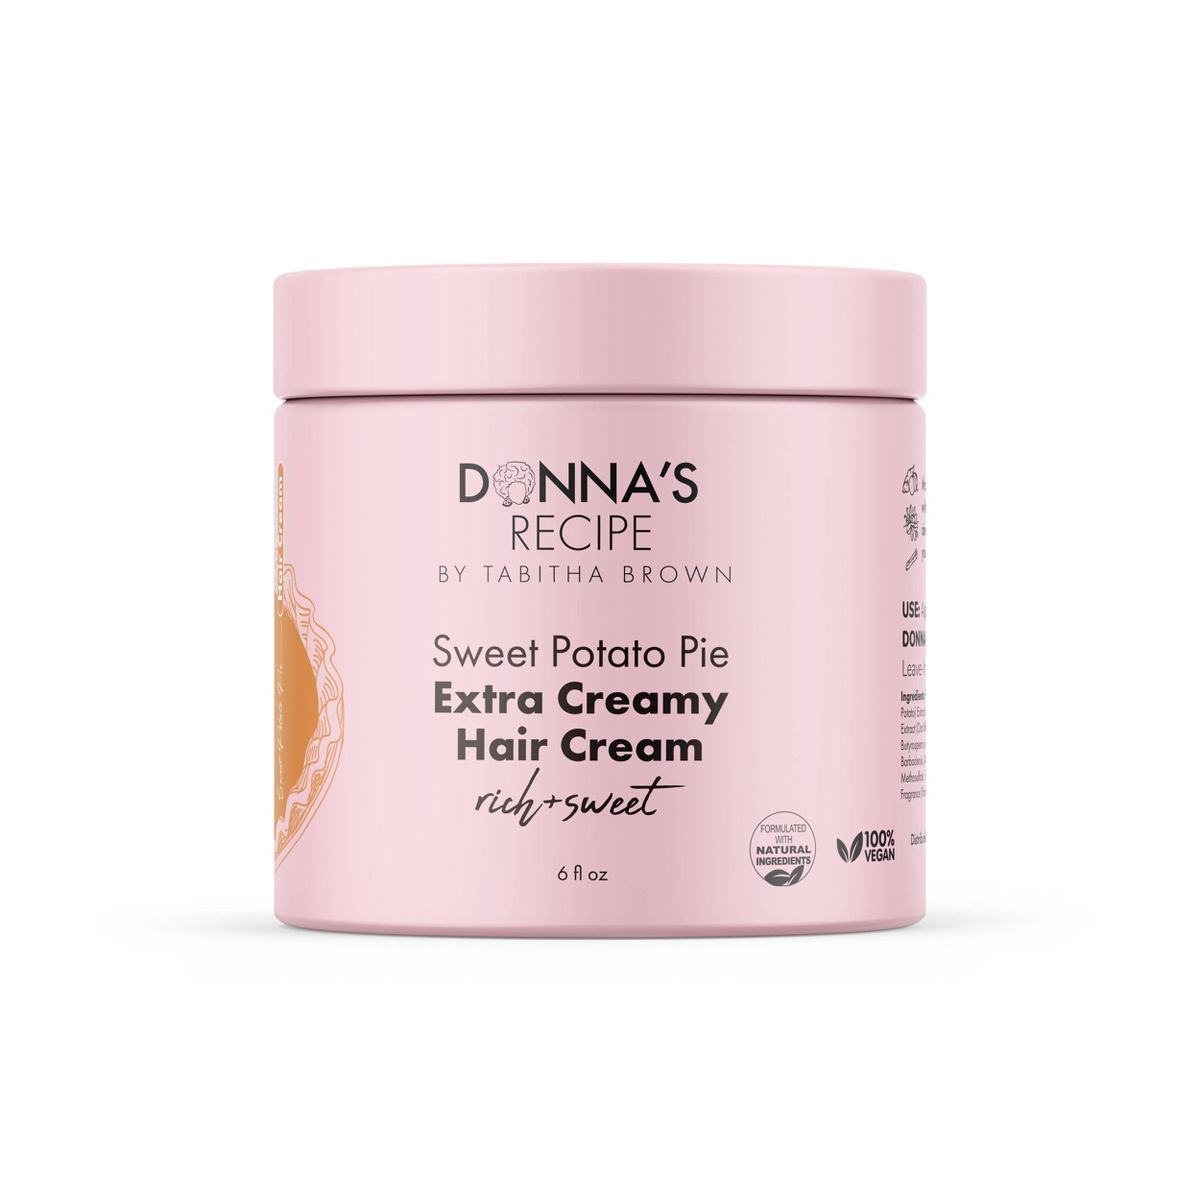 Donna's Recipe Sweet Potato Pie Hair Cream - 6 fl oz | Target